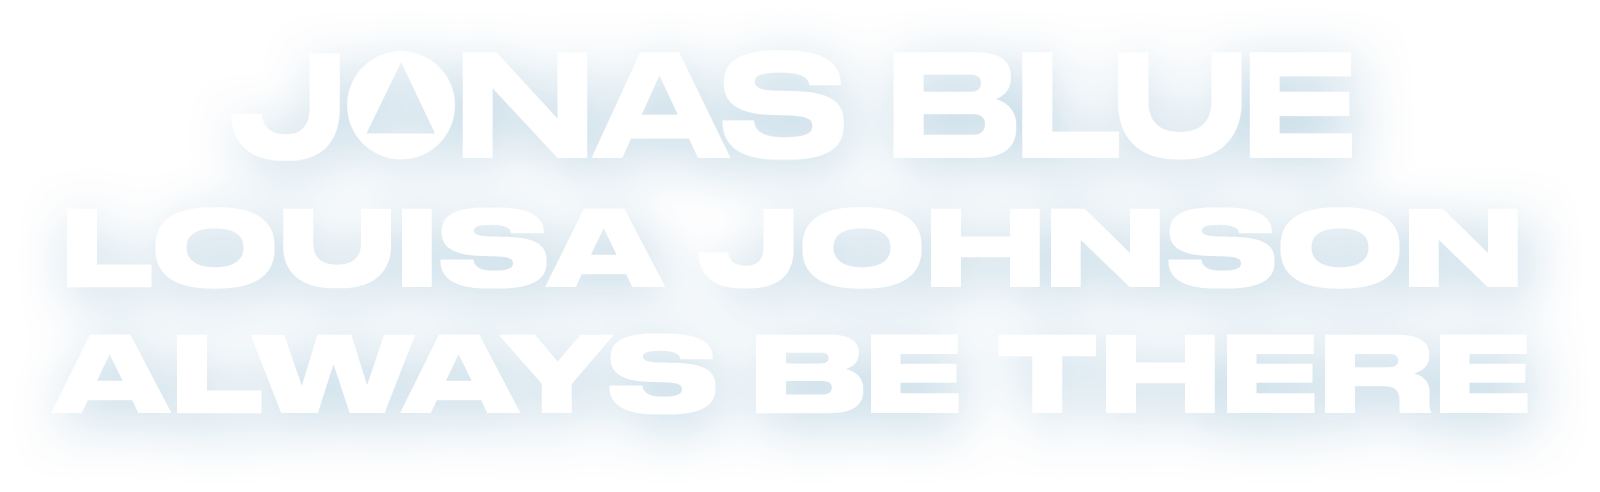 Jonas Blue - Lousia Johnson - Always Be There